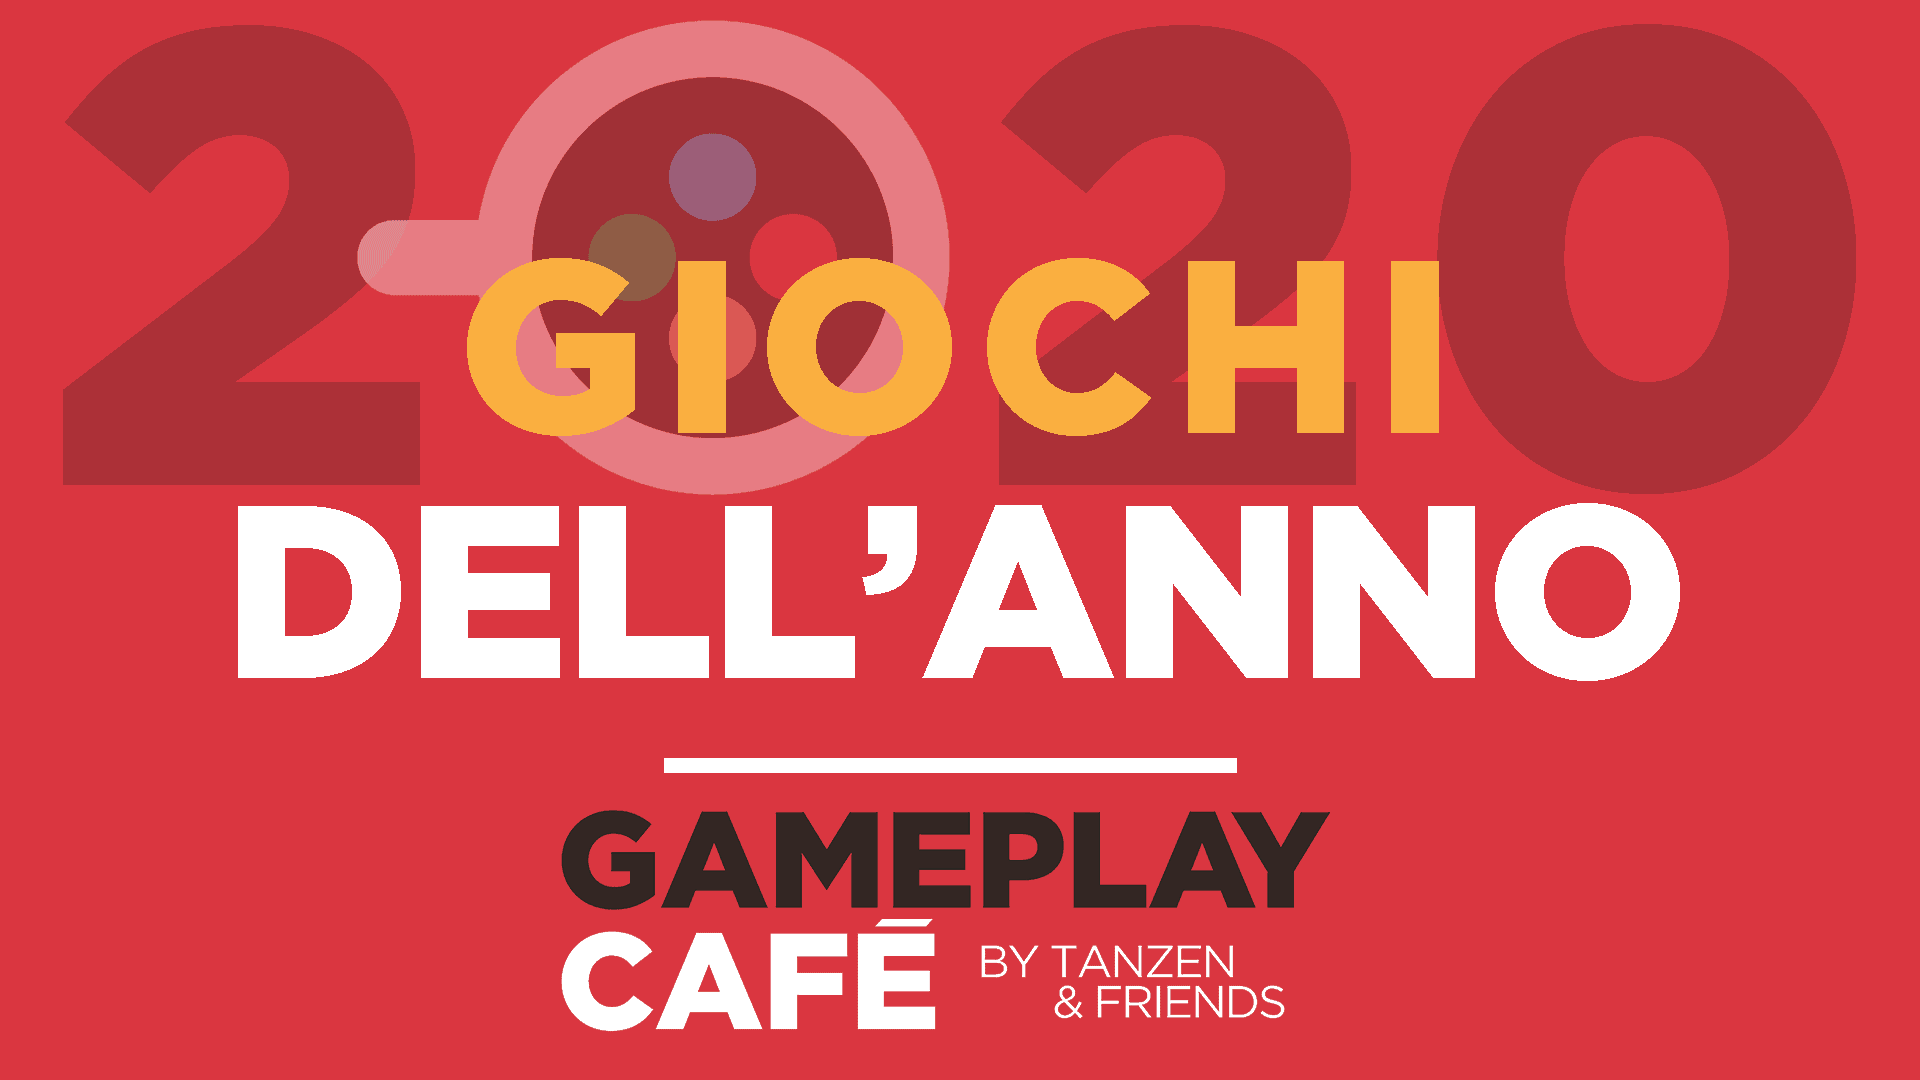 gameplay.cafe